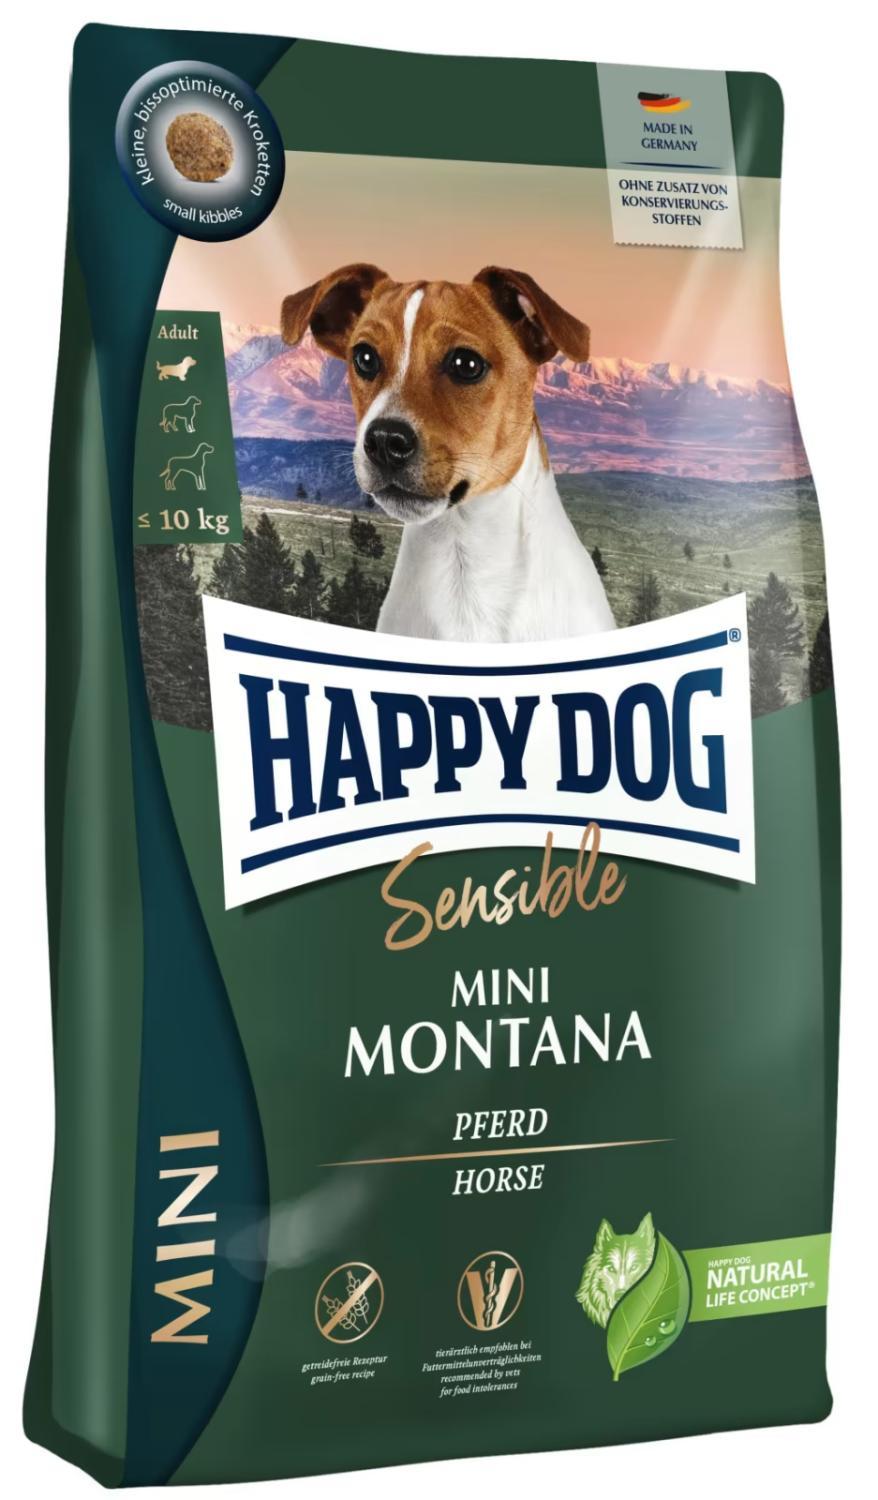 2051 64839 - Happy Dog Sensible Mini Montana 4 Kg, Hest